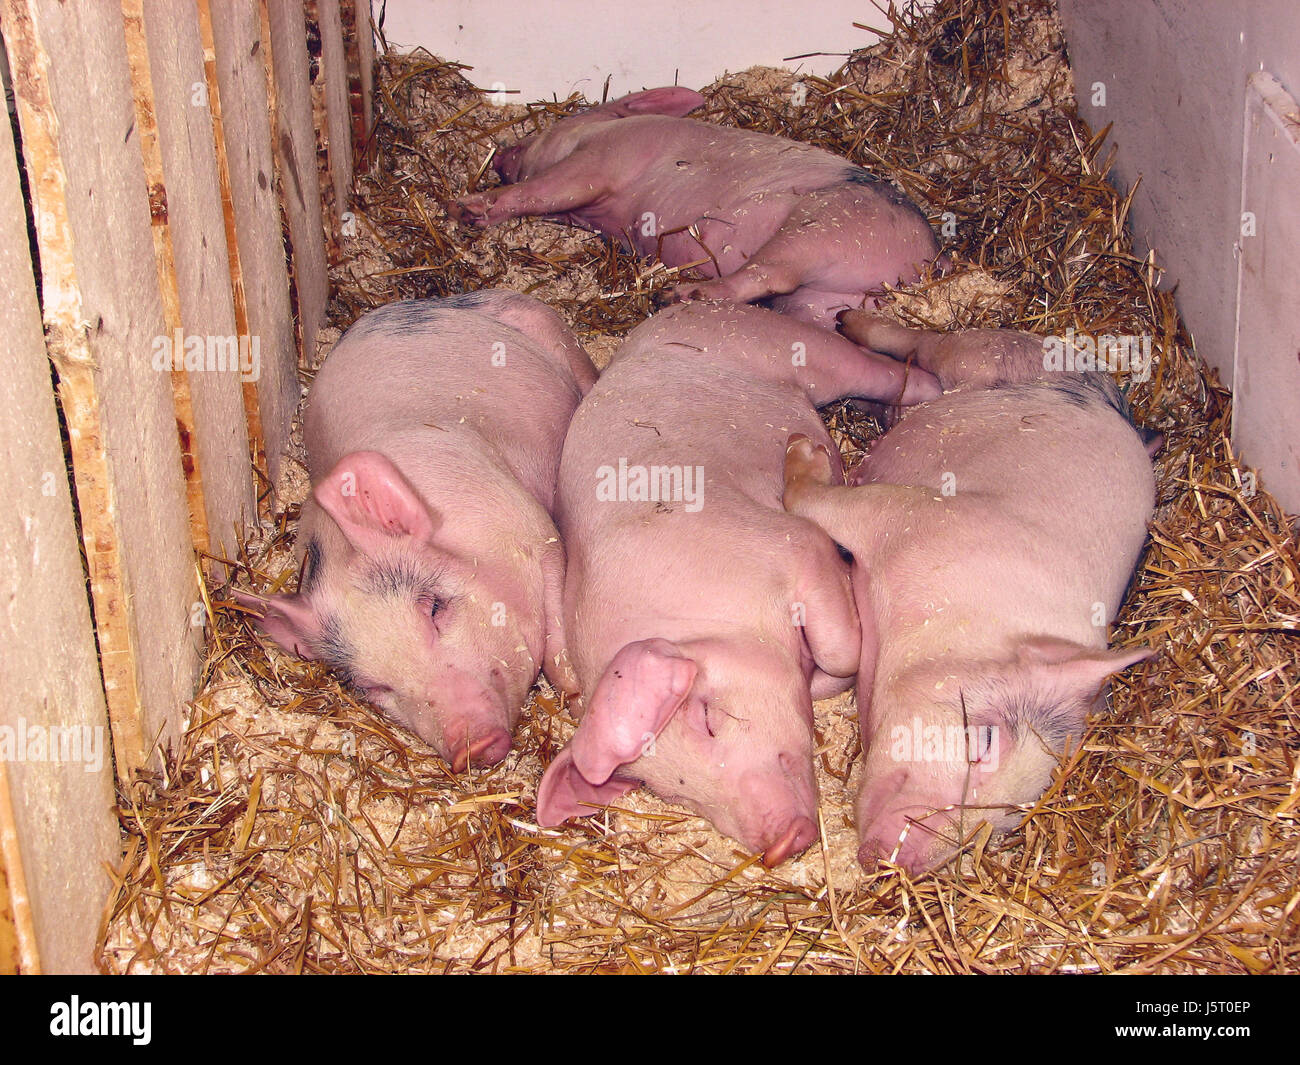 lie lying lies sleep sleeping stable pigs grunt nap litter full stall pig Stock Photo